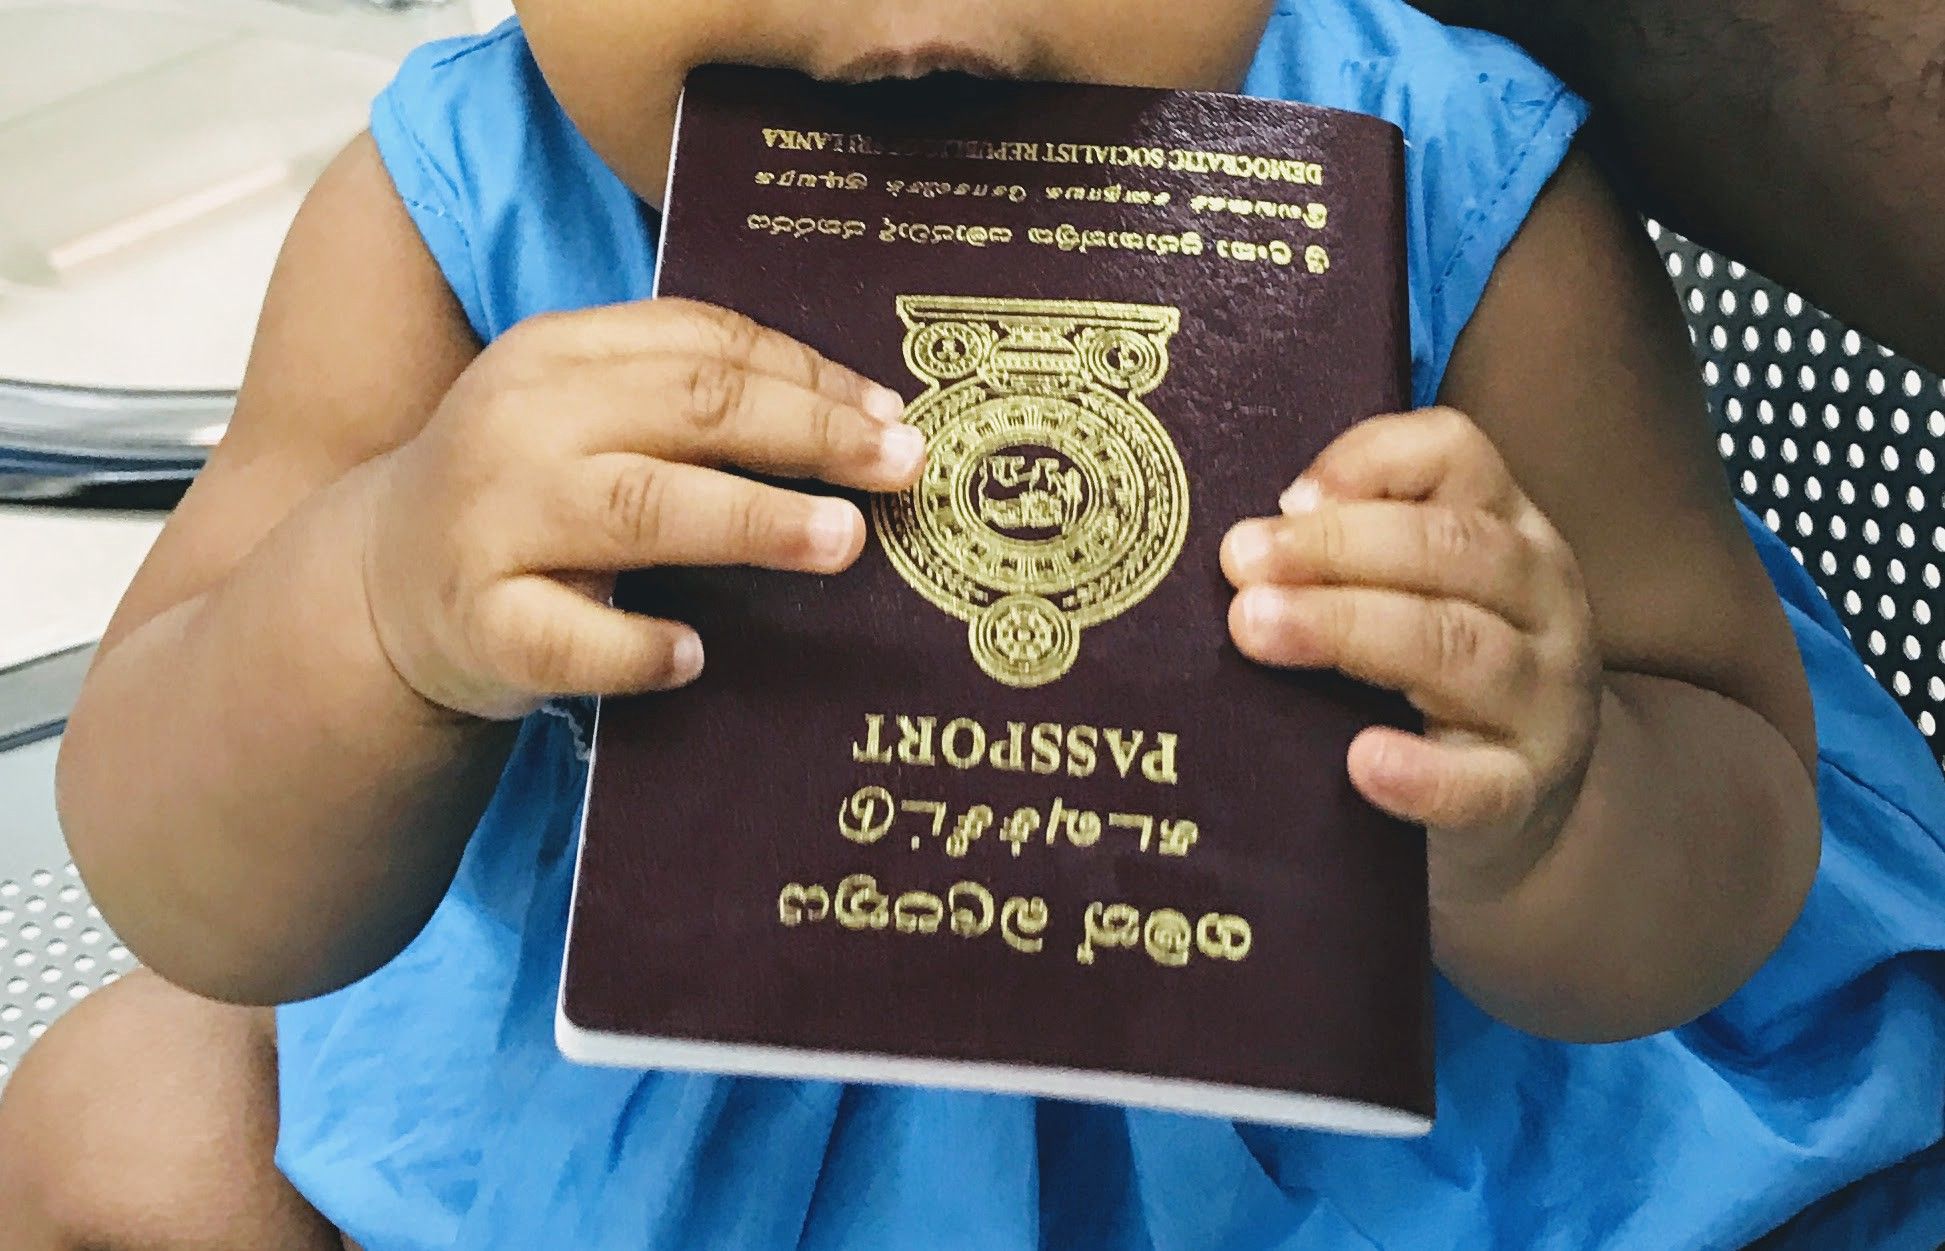 Why Are Brown Passports Shitty And White Passports Good?